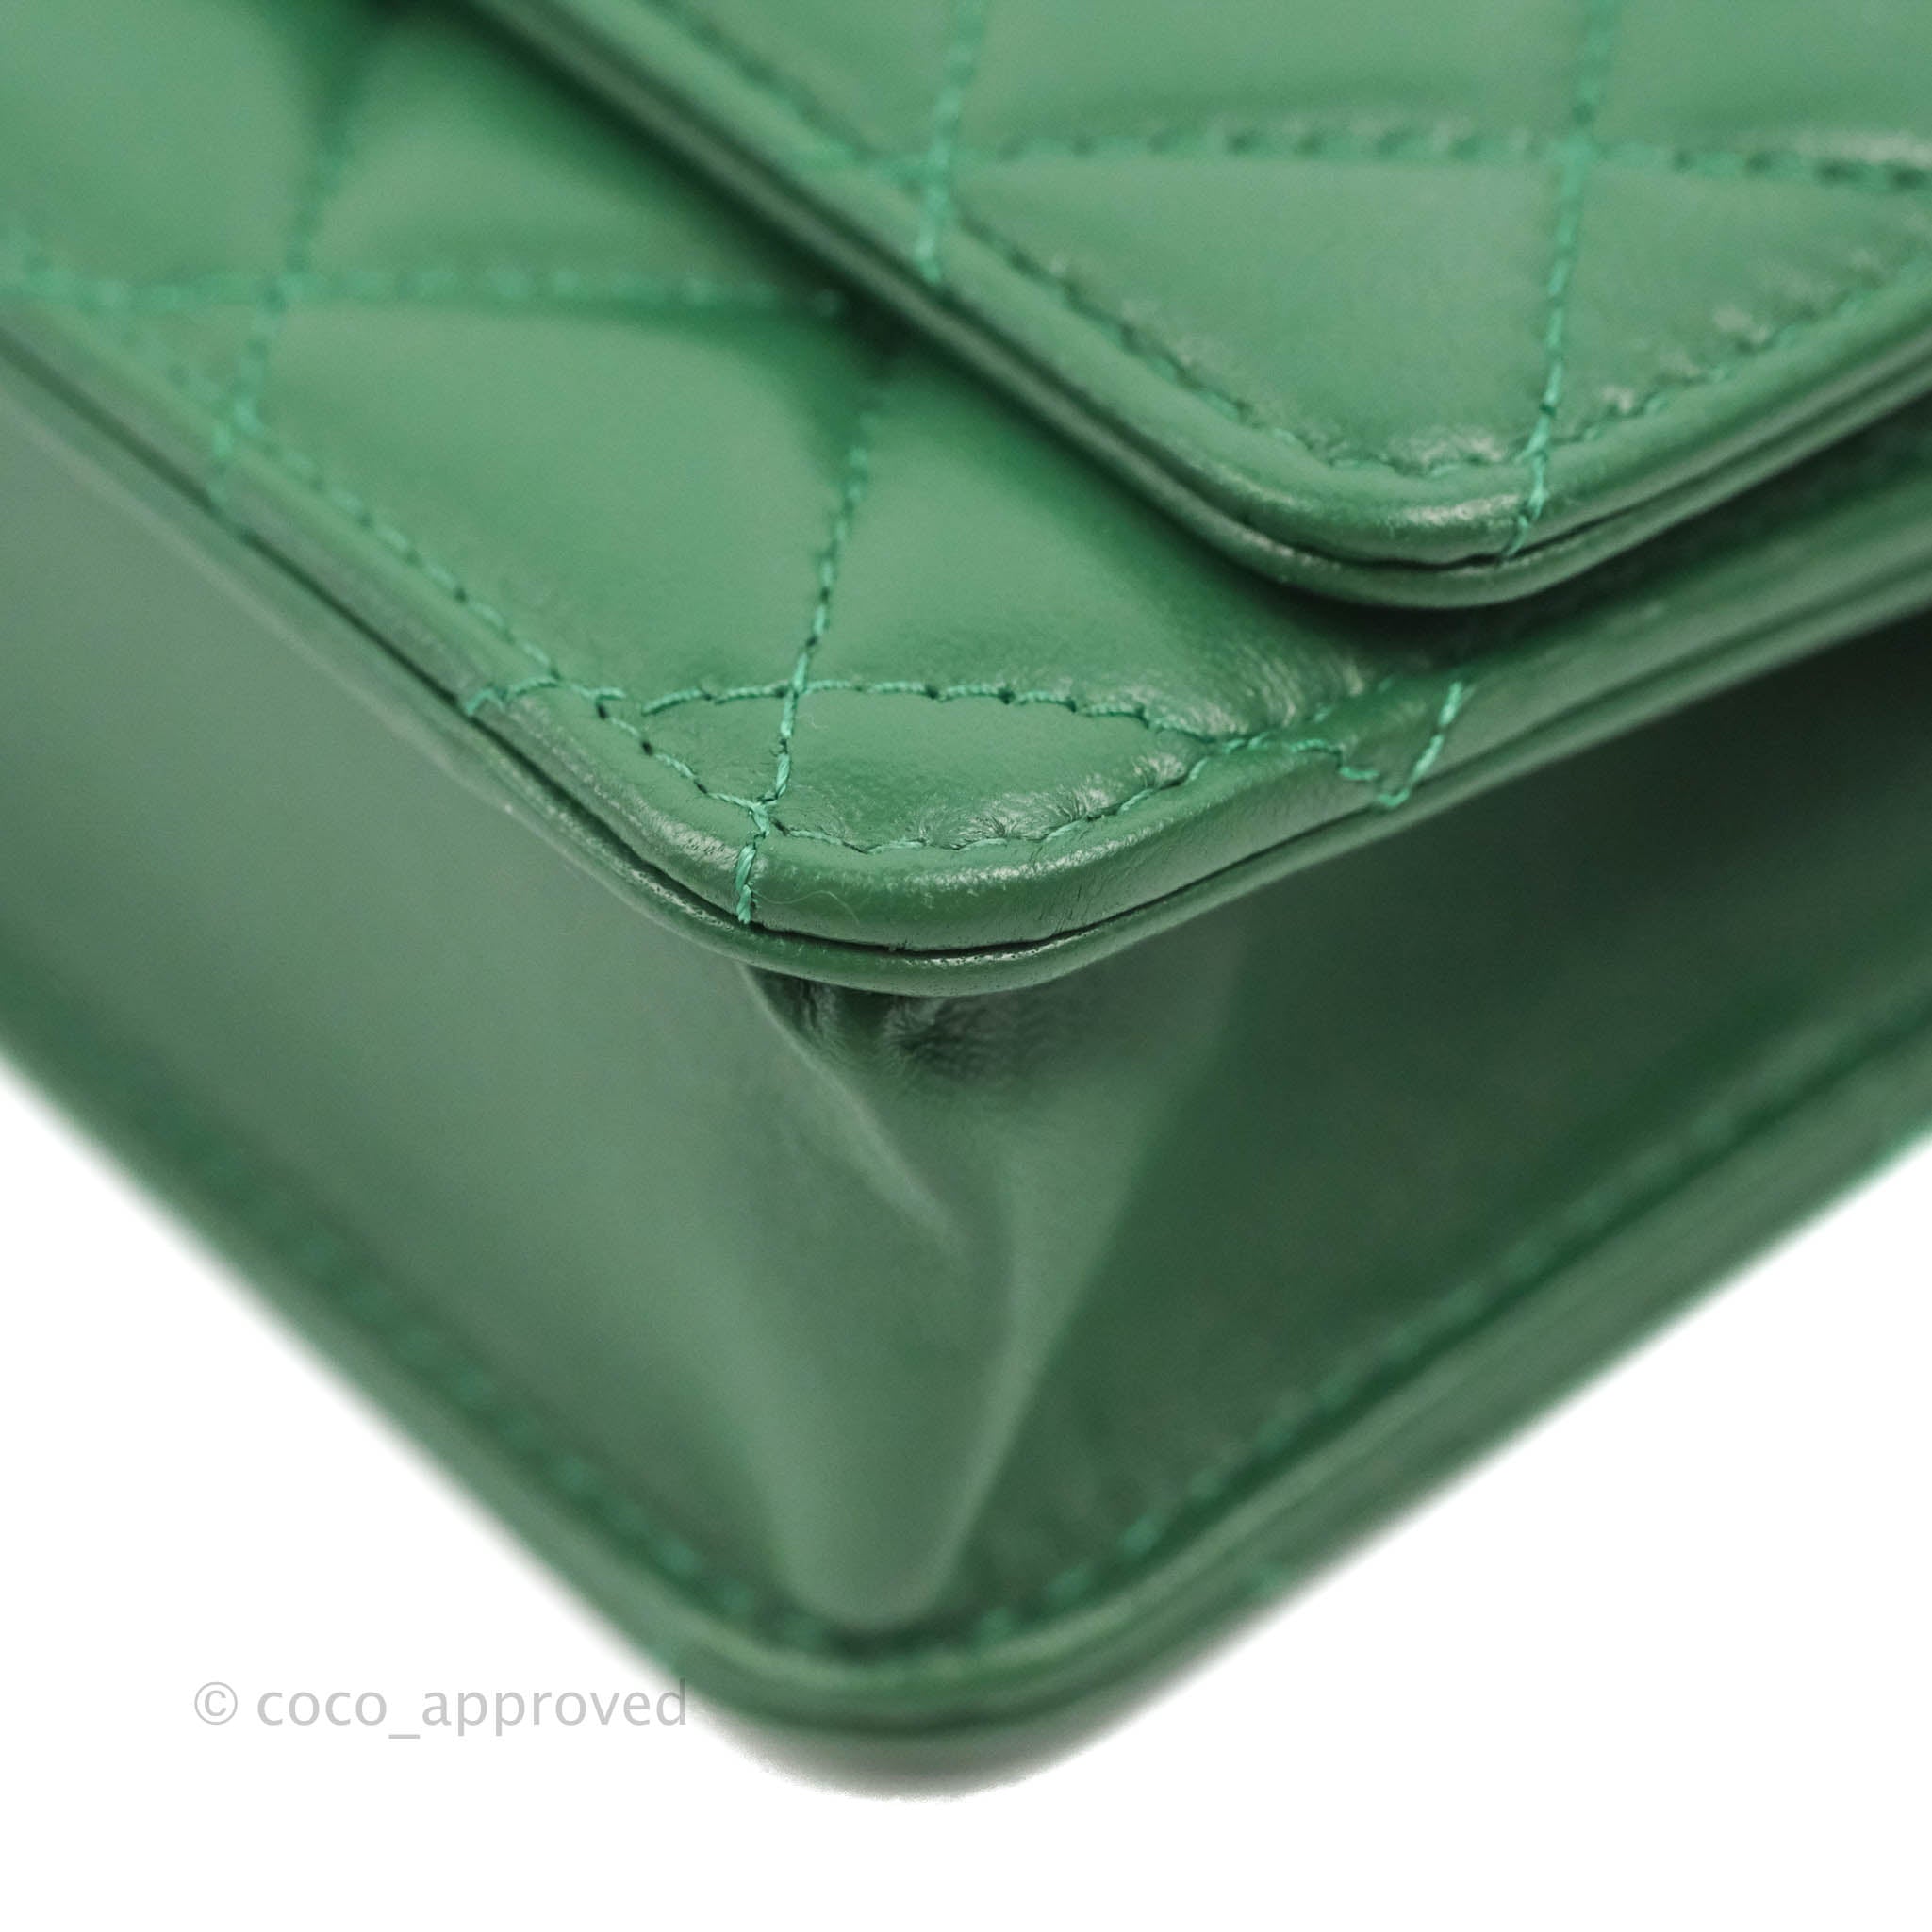 green chanel wallet